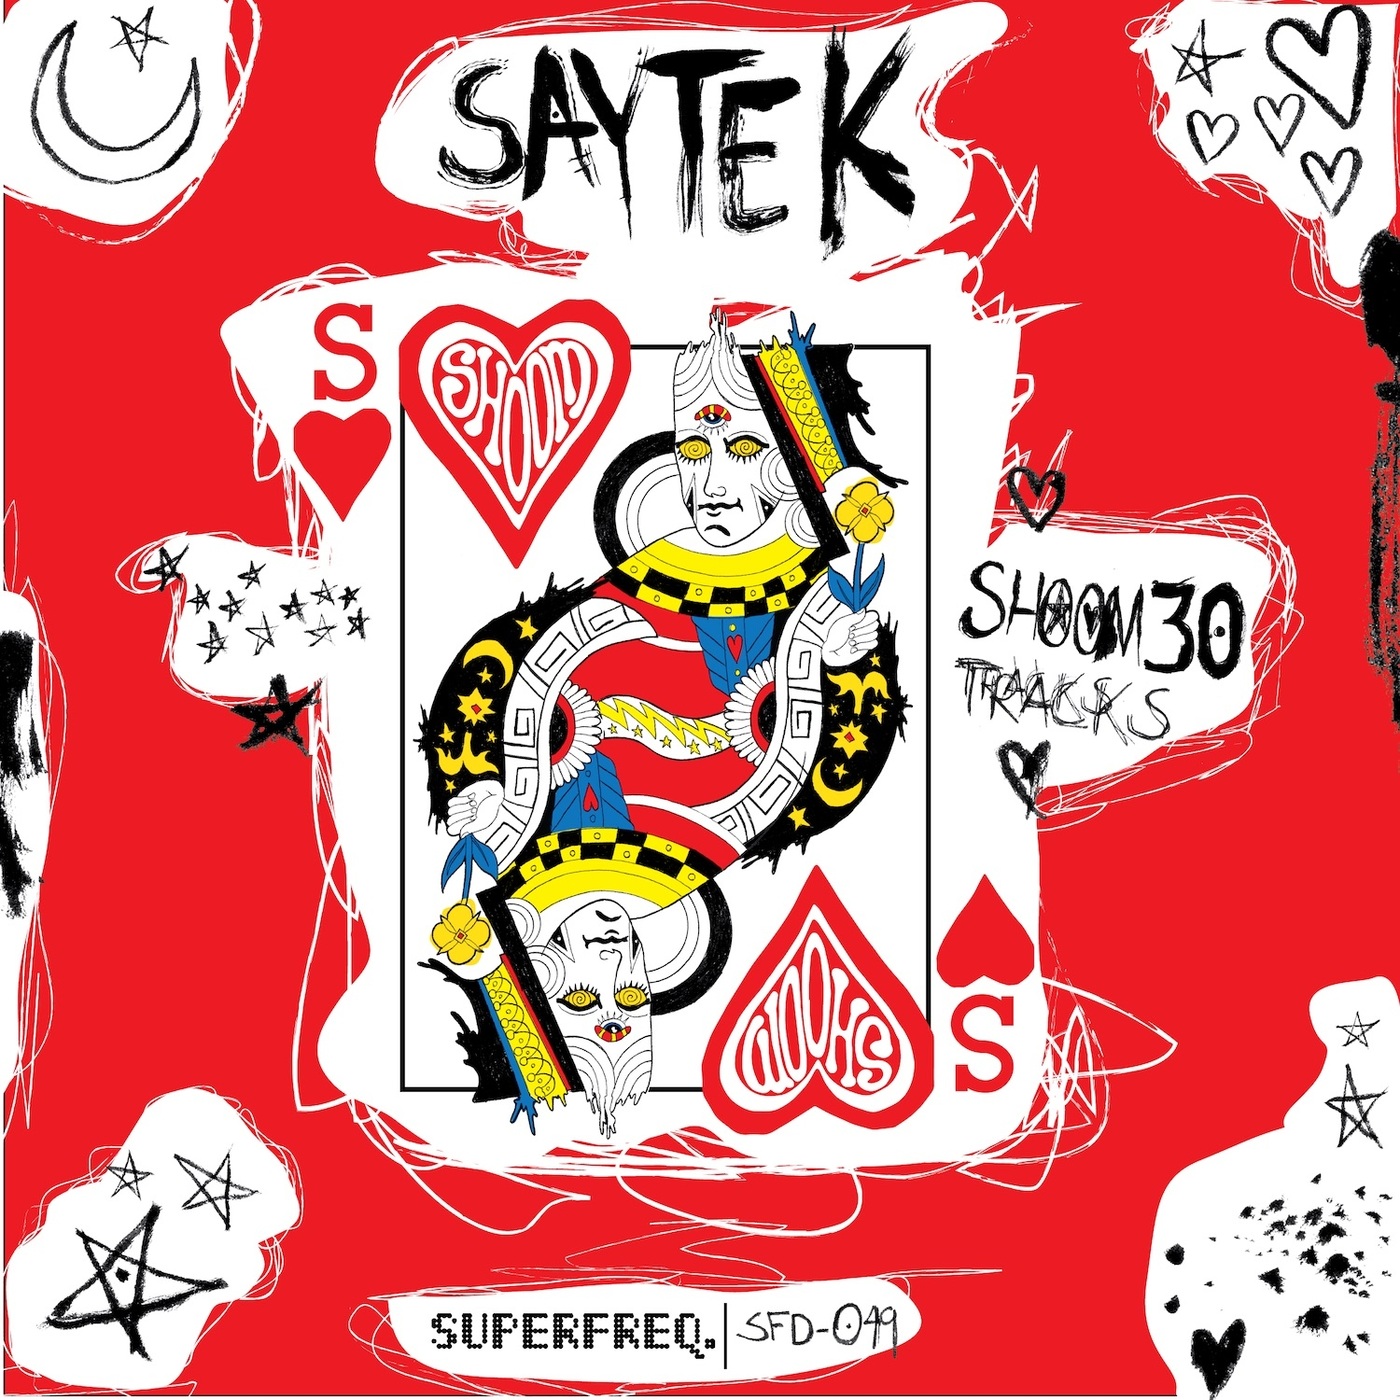 Saytek - Shoom30 Tracks / Superfreq